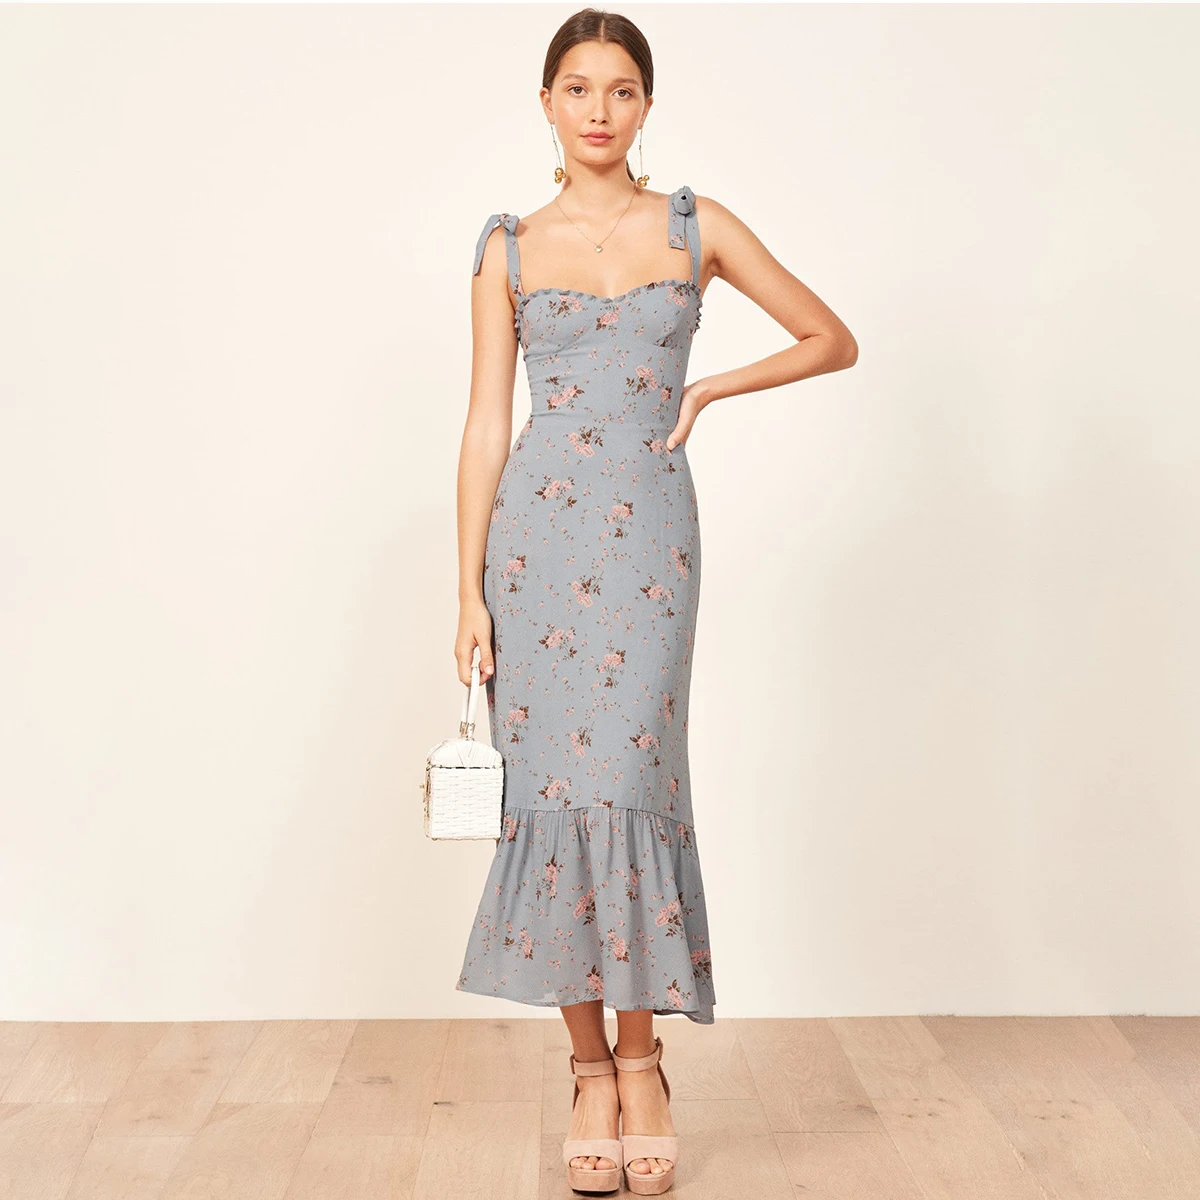 Nikita Blue Chic Midi Dress Women Summer Sleeveless Strapless Ruffles Sexy Dresses 2019 Vintage Elegant Floral Printed Dress